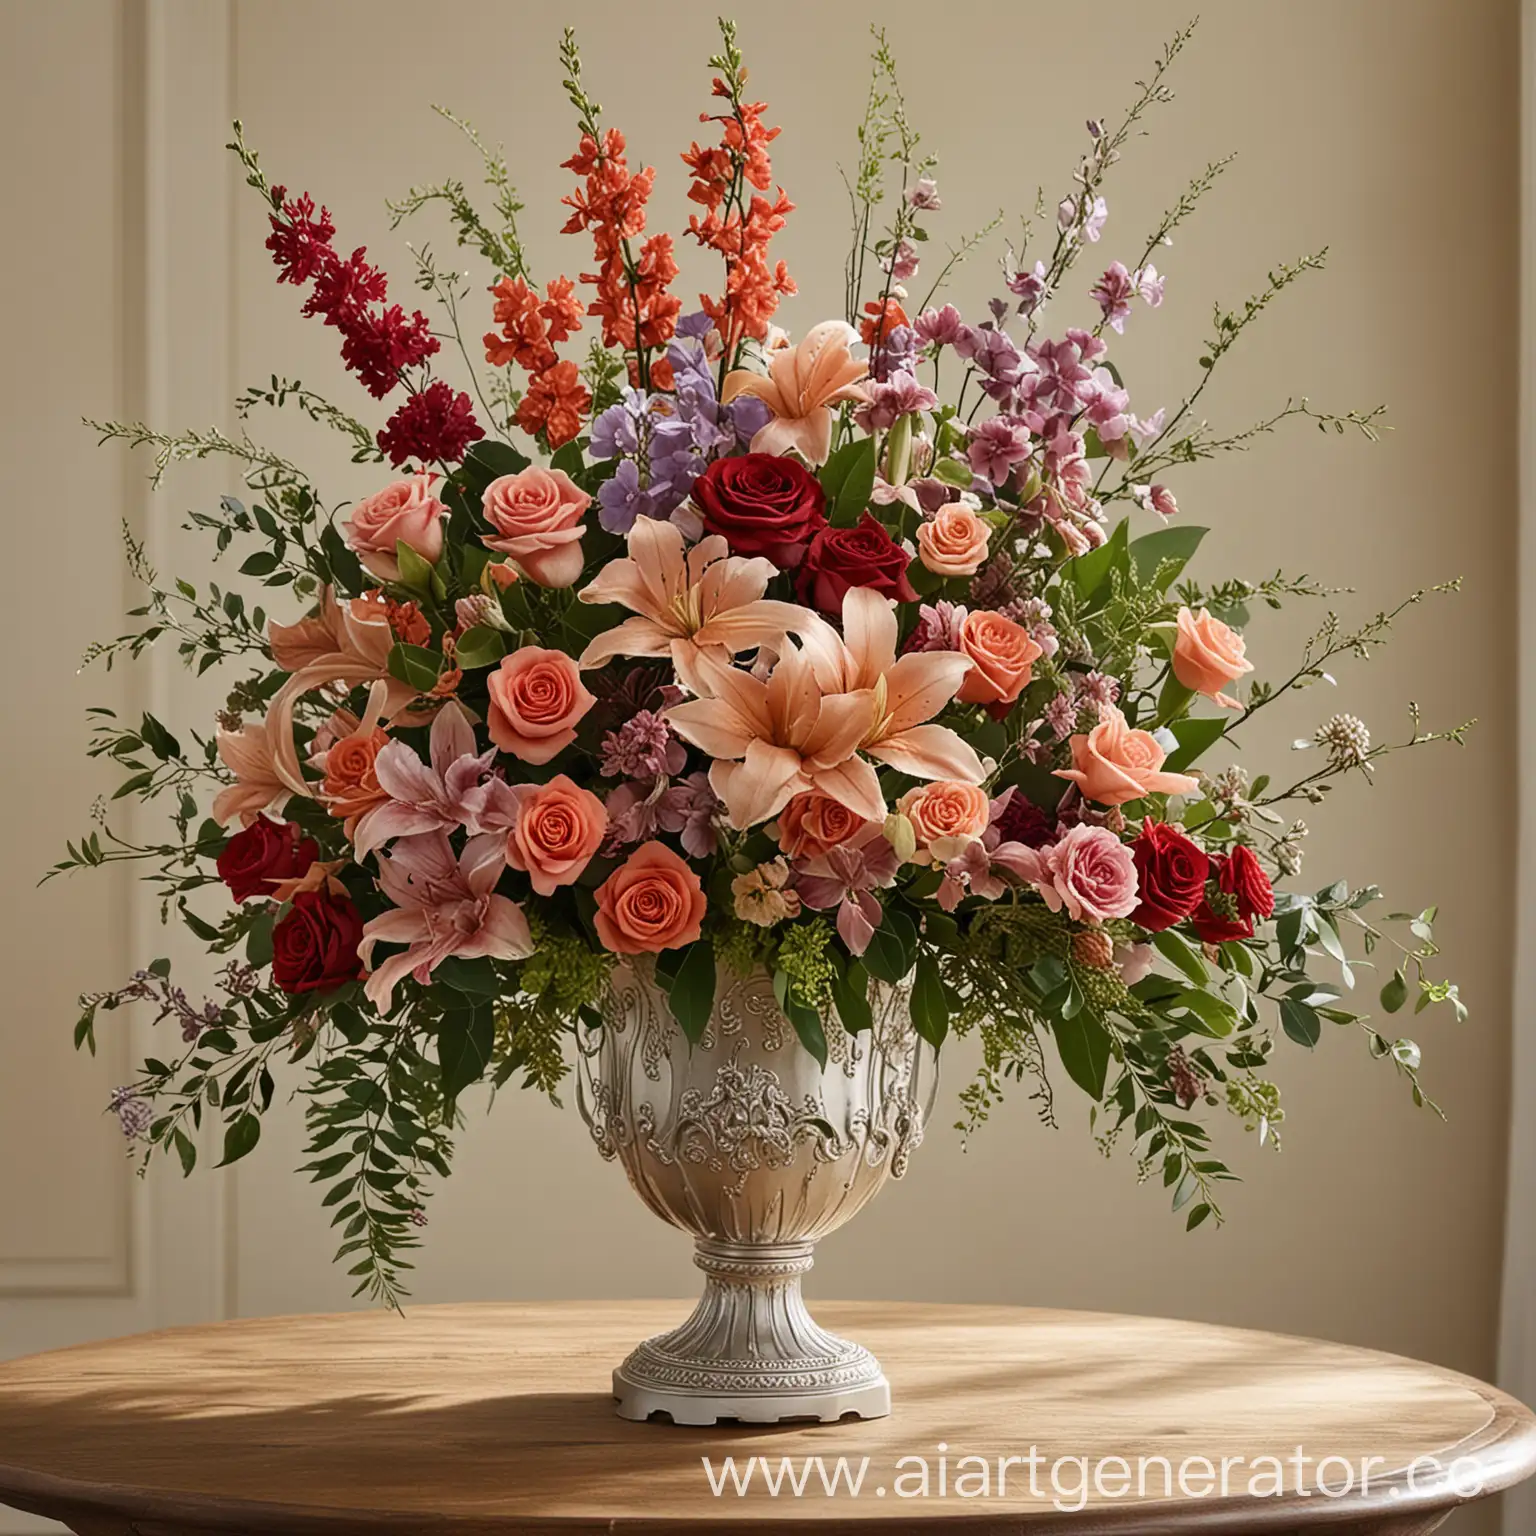 Exquisite-Floral-Arrangements-Enhancing-Beauty-with-Florist-Artistry